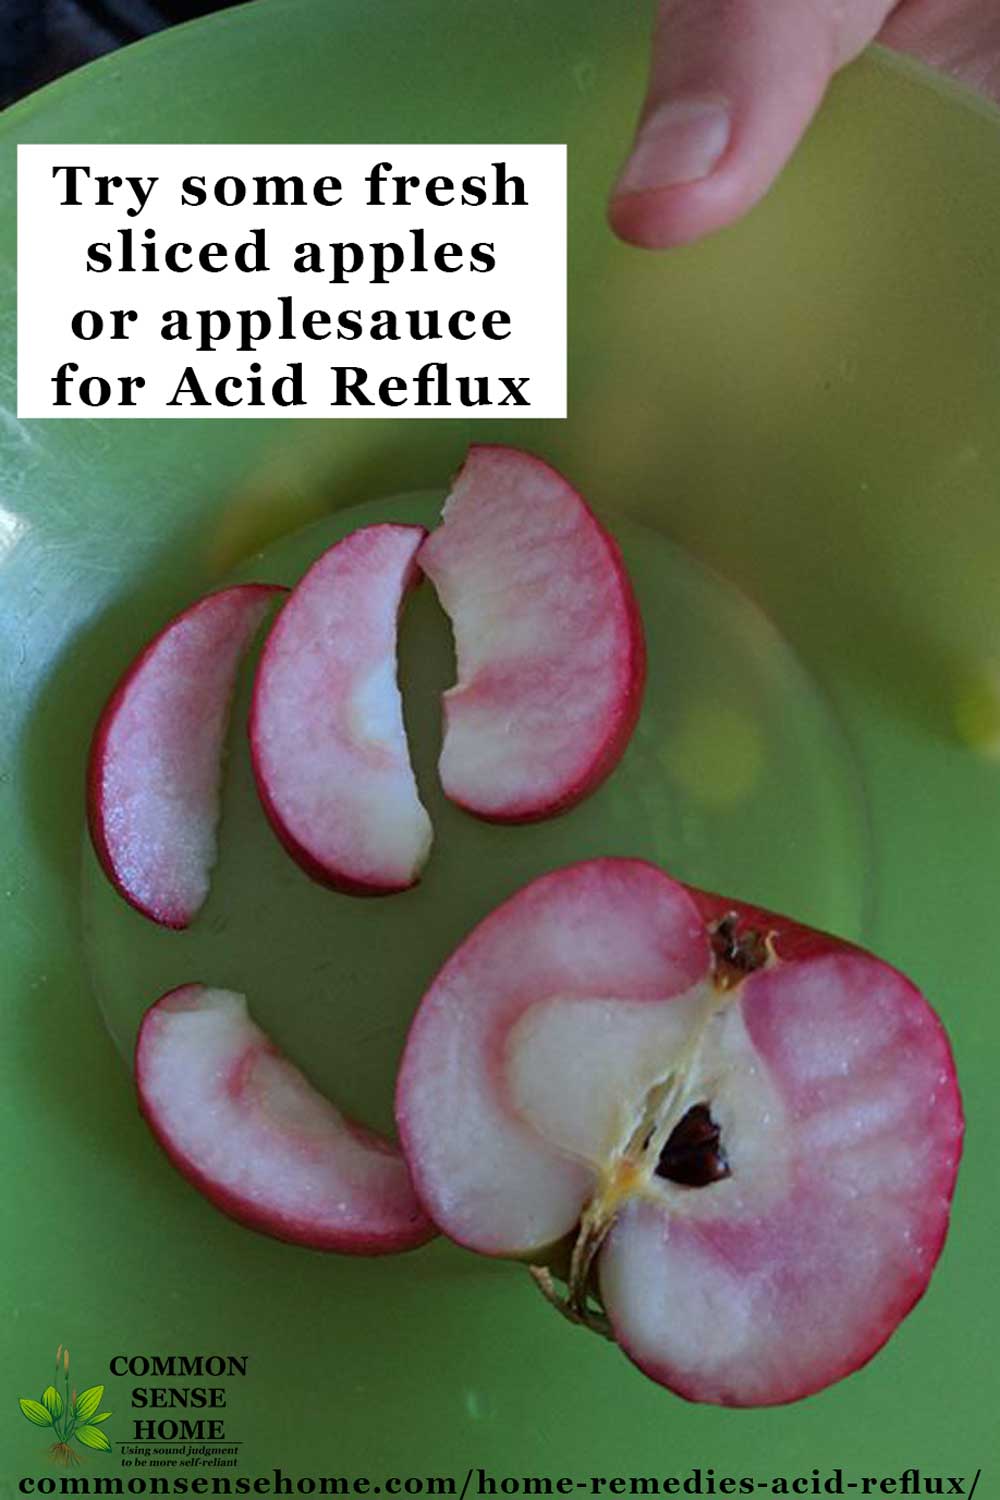 Apple slices for natural acid reflux remedy